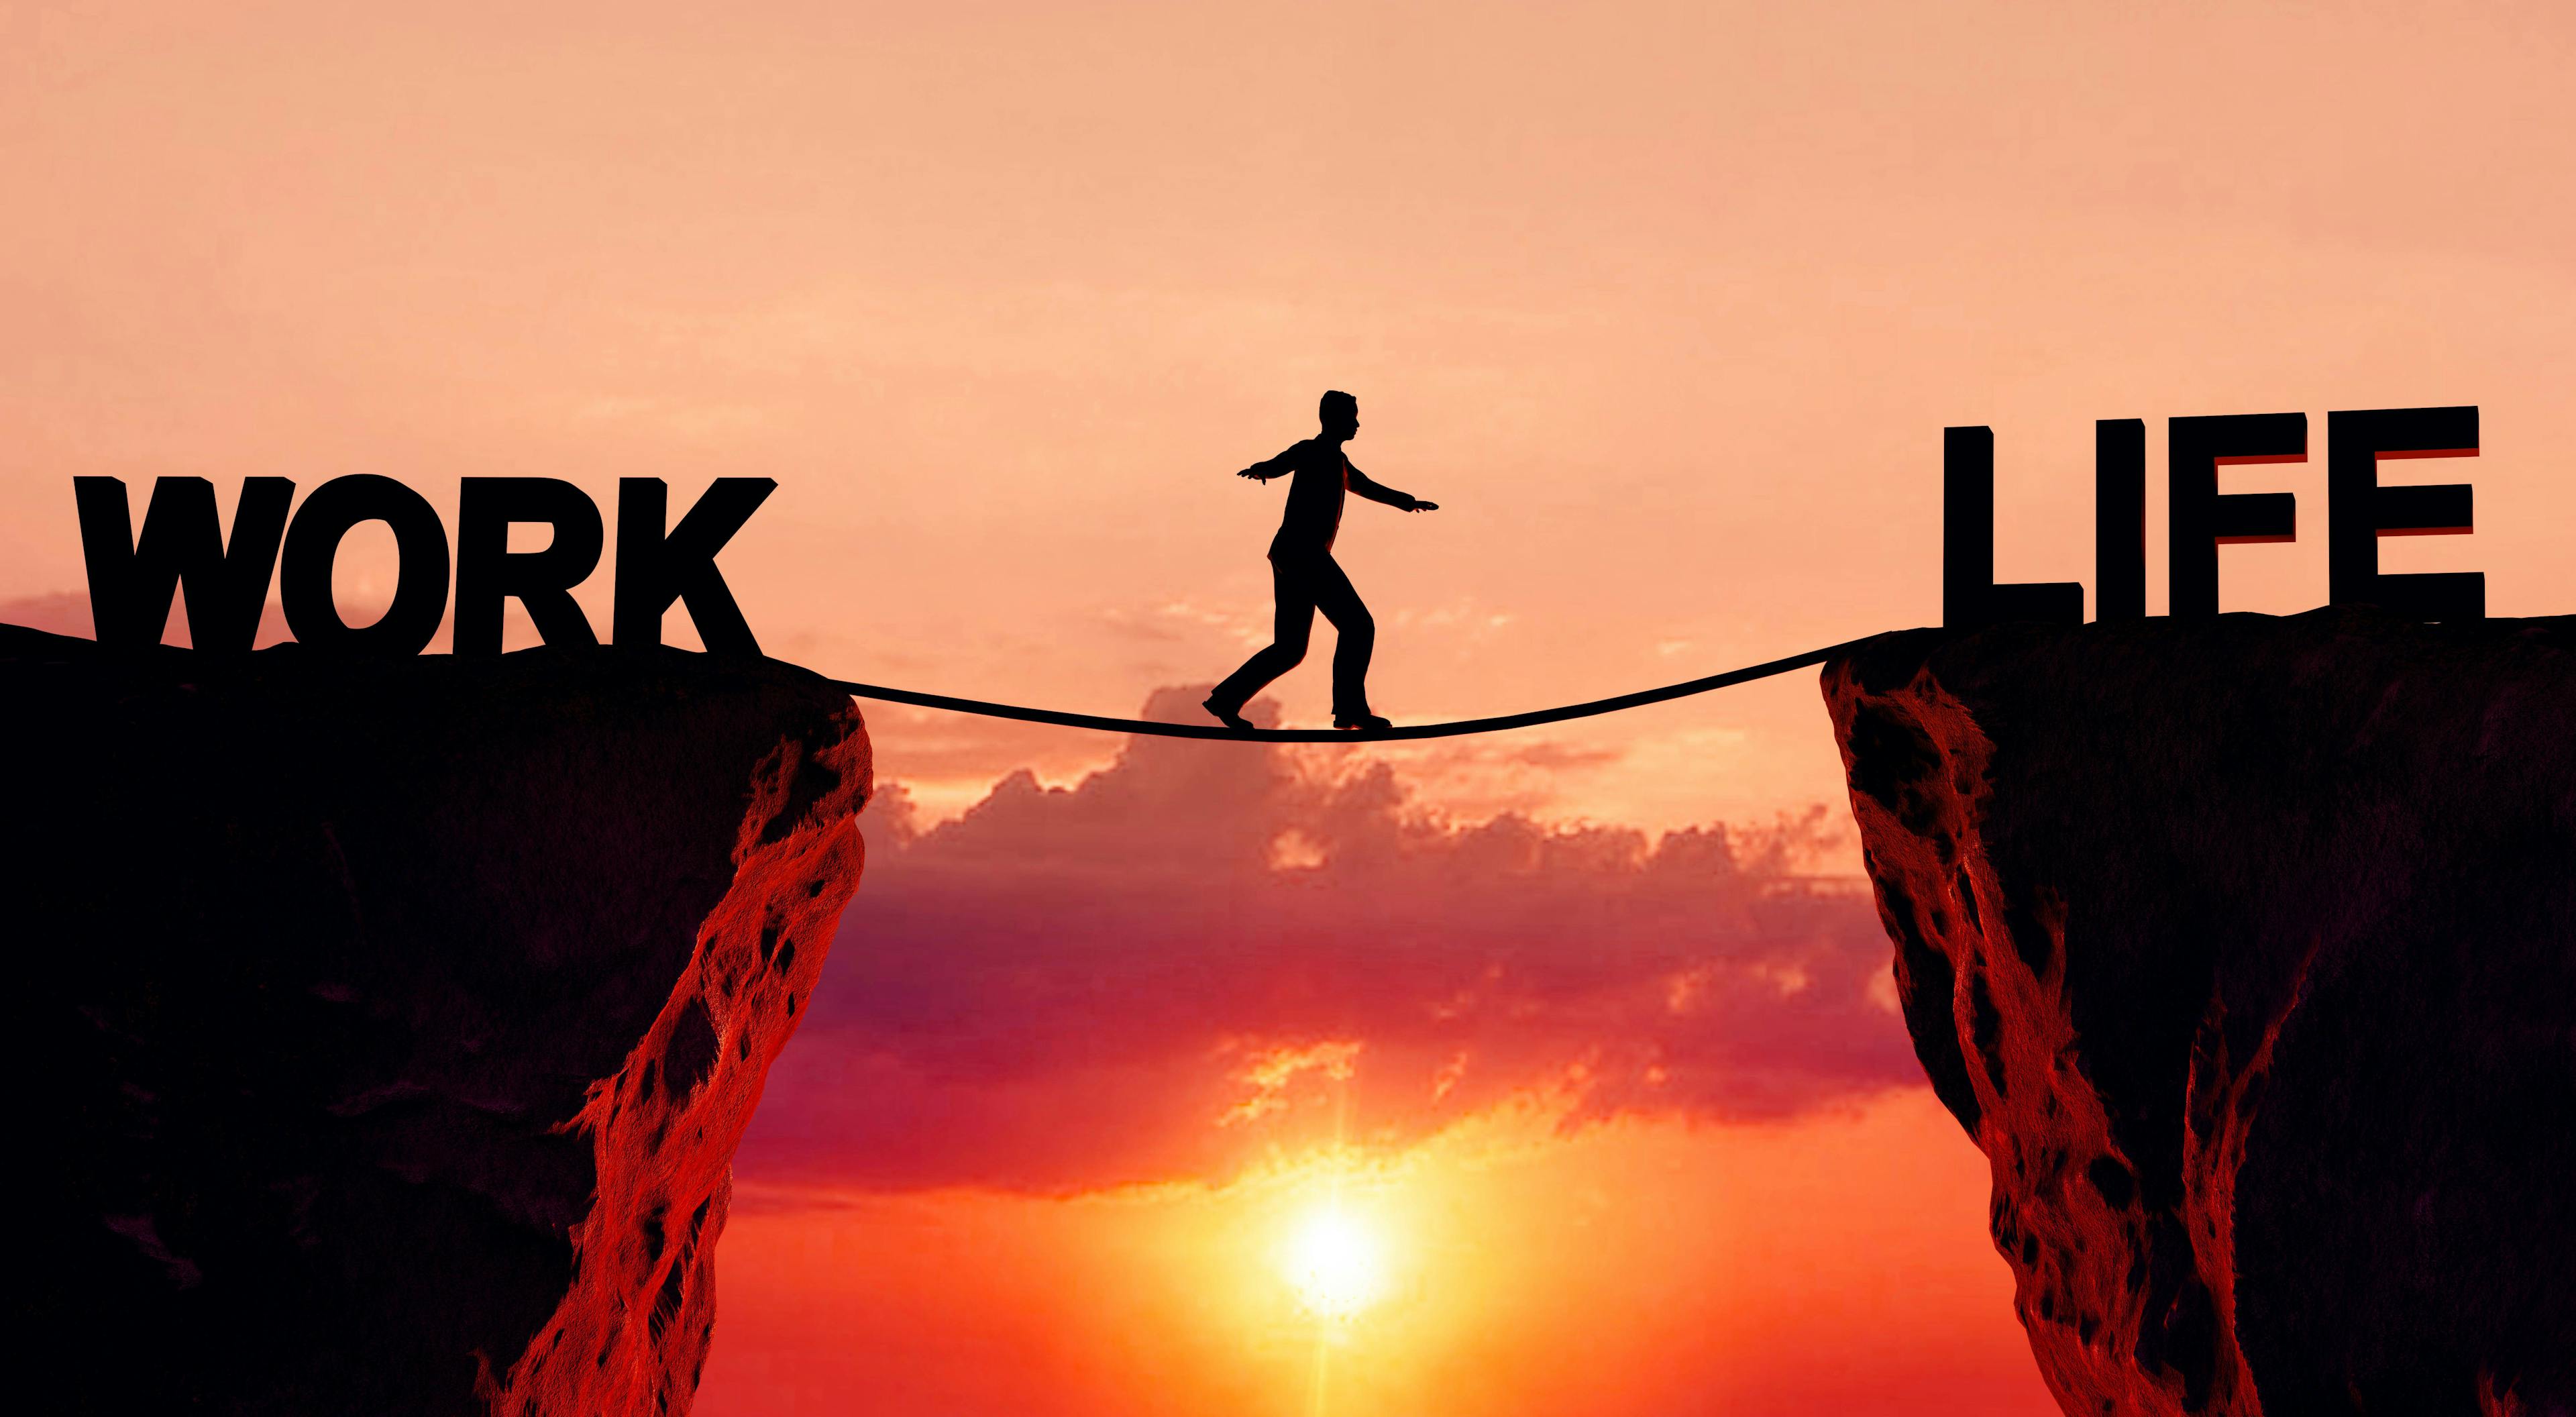 work life balance tightrope